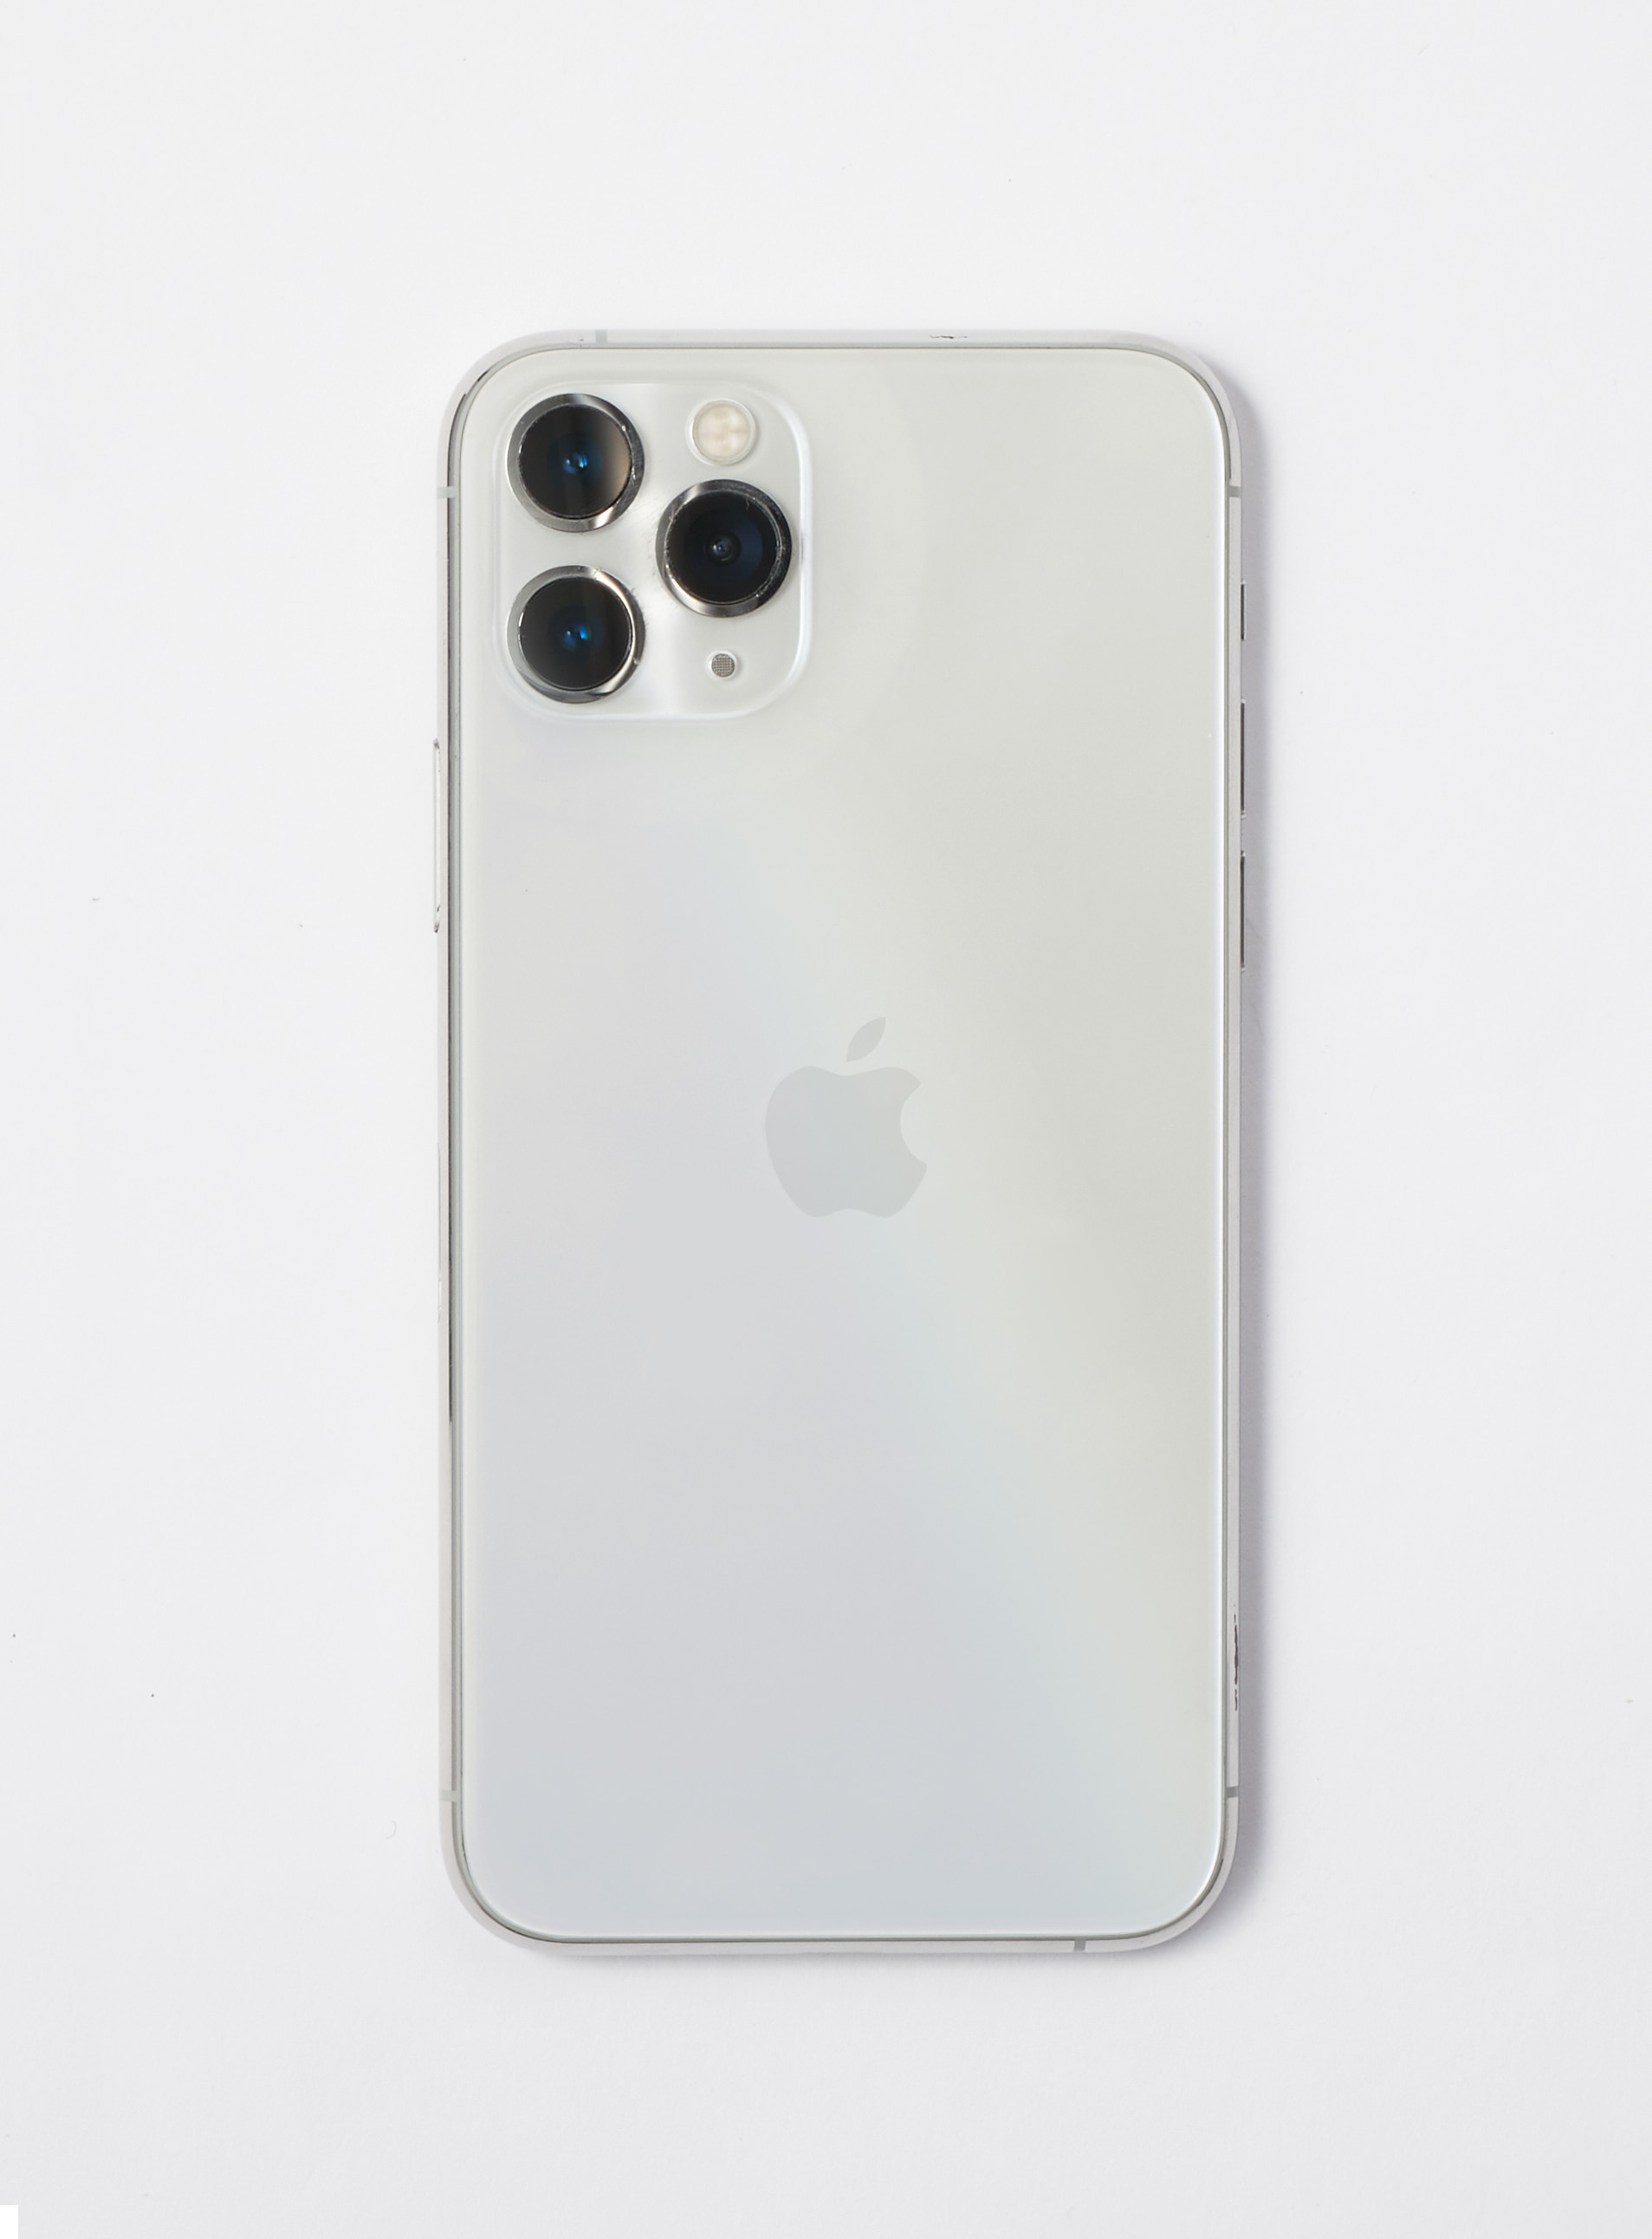 Electronics - Phones - Smartphones - Apple iPhone 11 Pro Max 256GB 